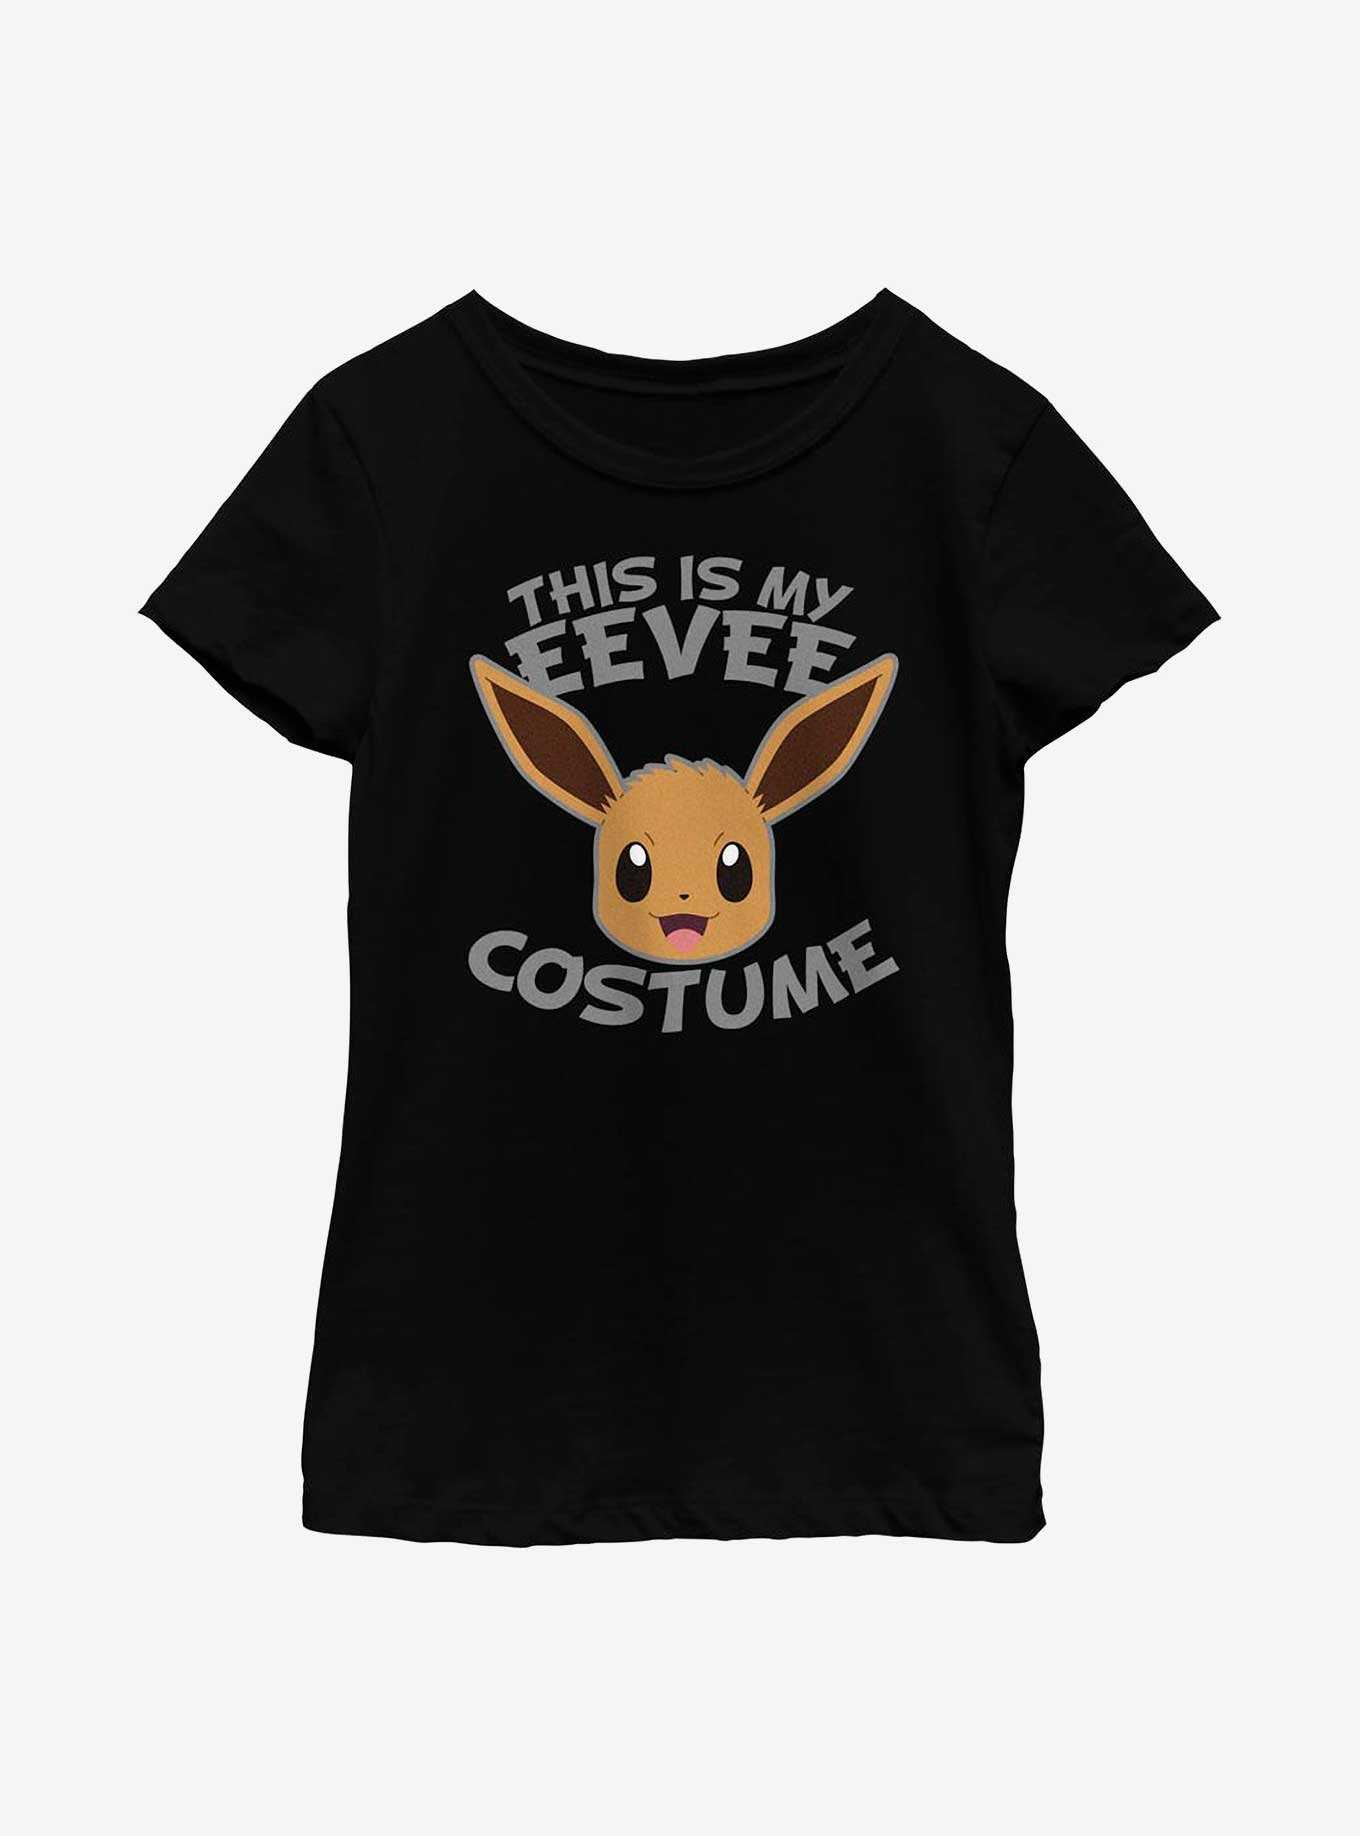 Pokemon Eevee Costume Youth Girls T-Shirt, , hi-res